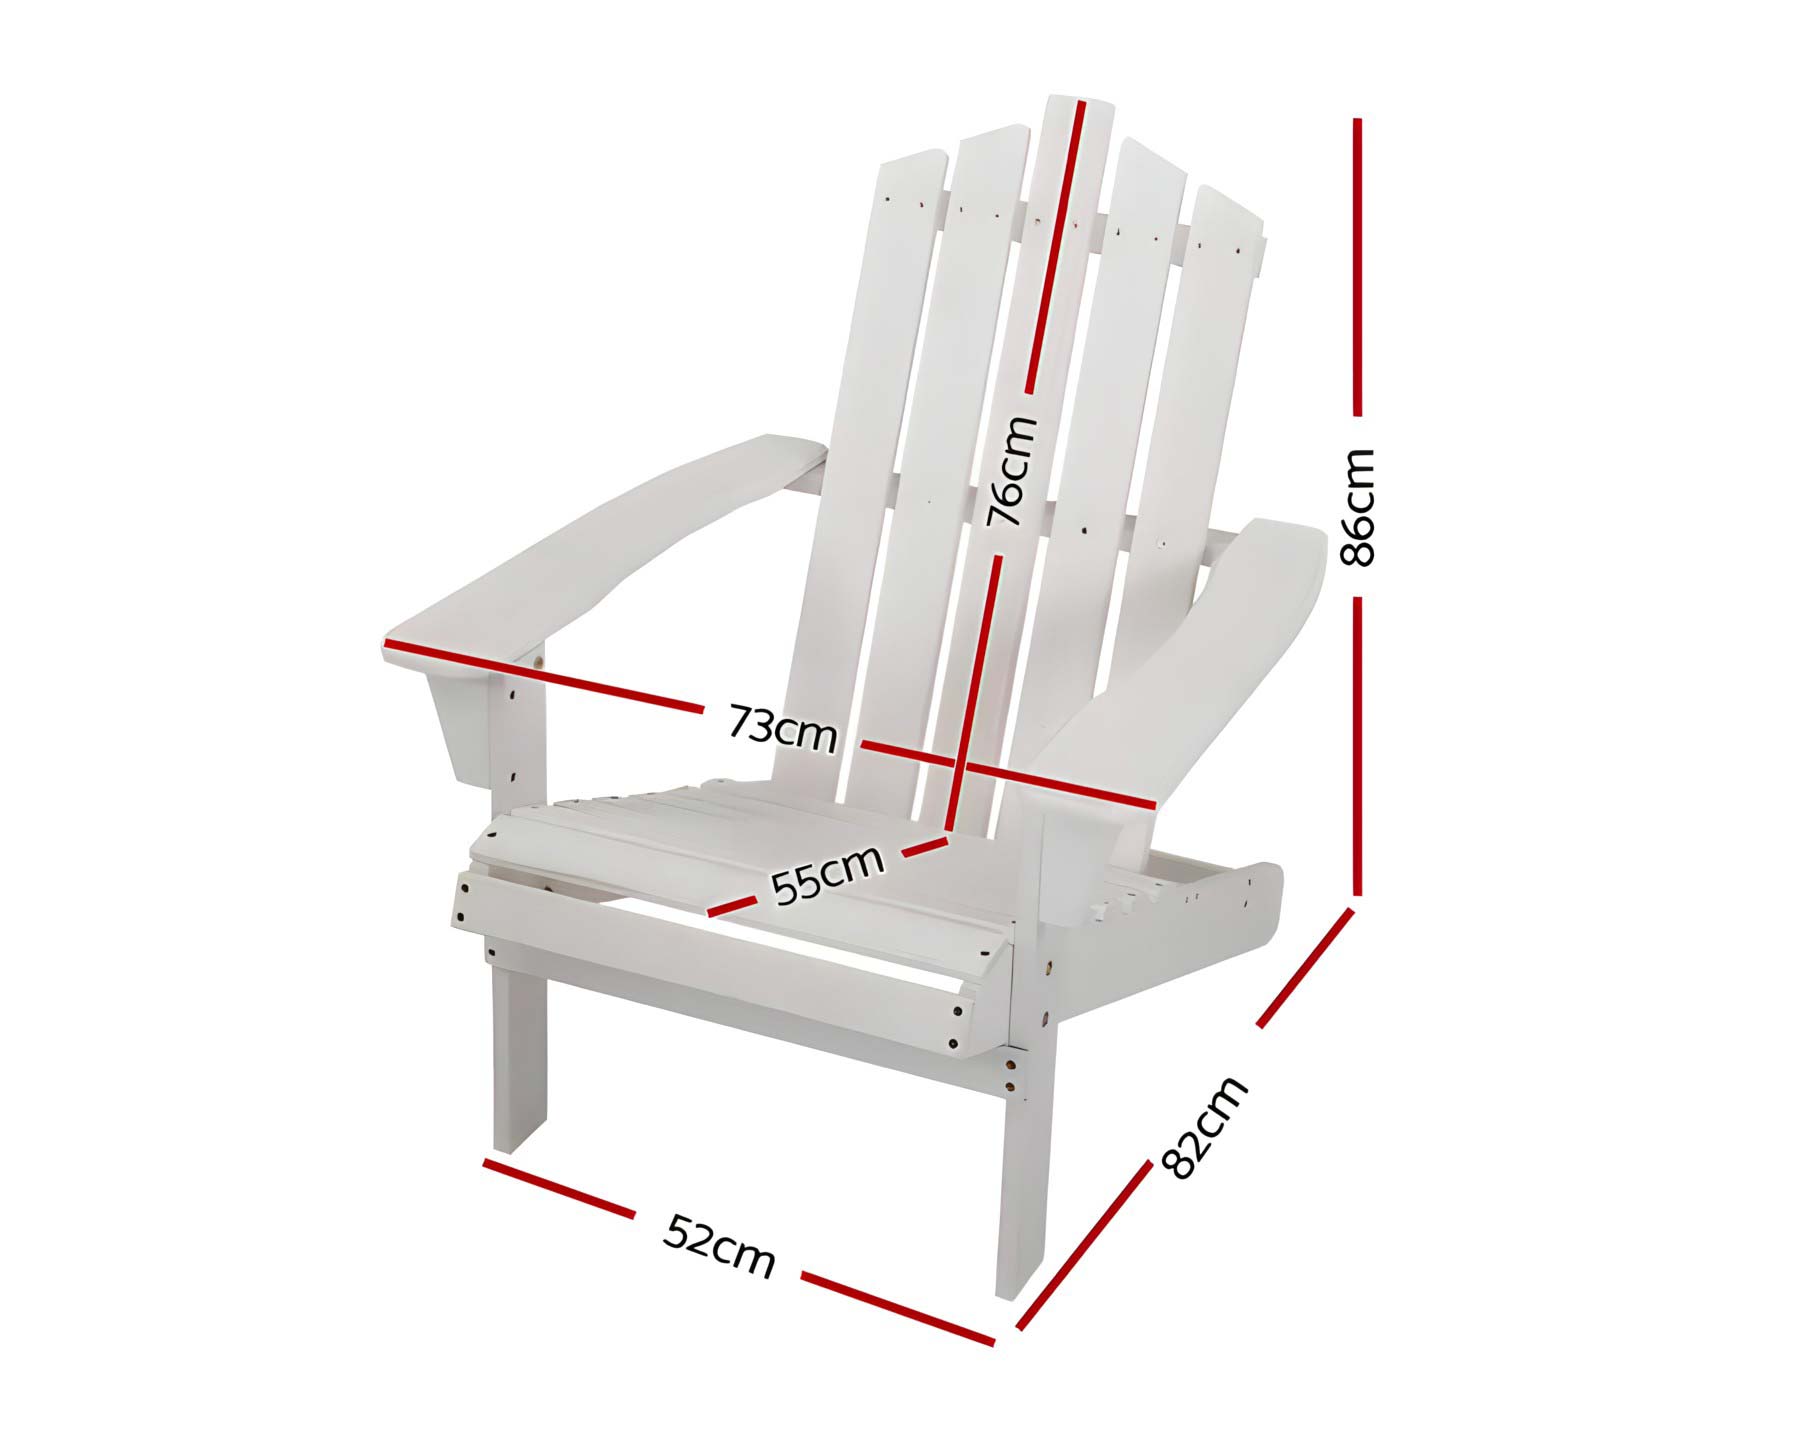 Dimensions - White - Adirondack Chair